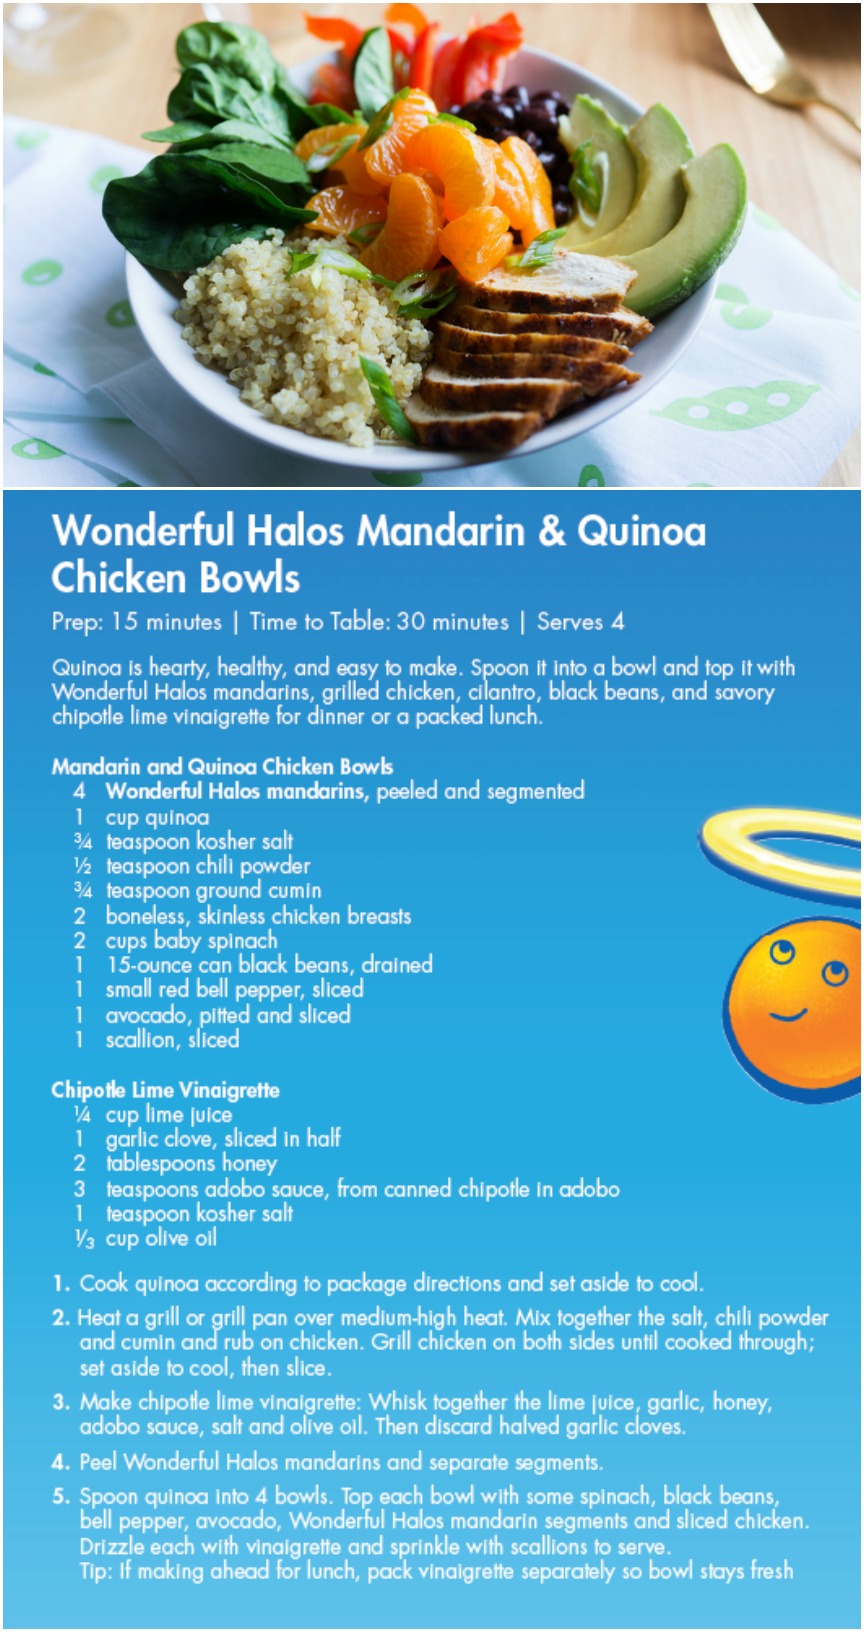 Wonderful Halos Mandarin & Quinoa Chicken Bowls